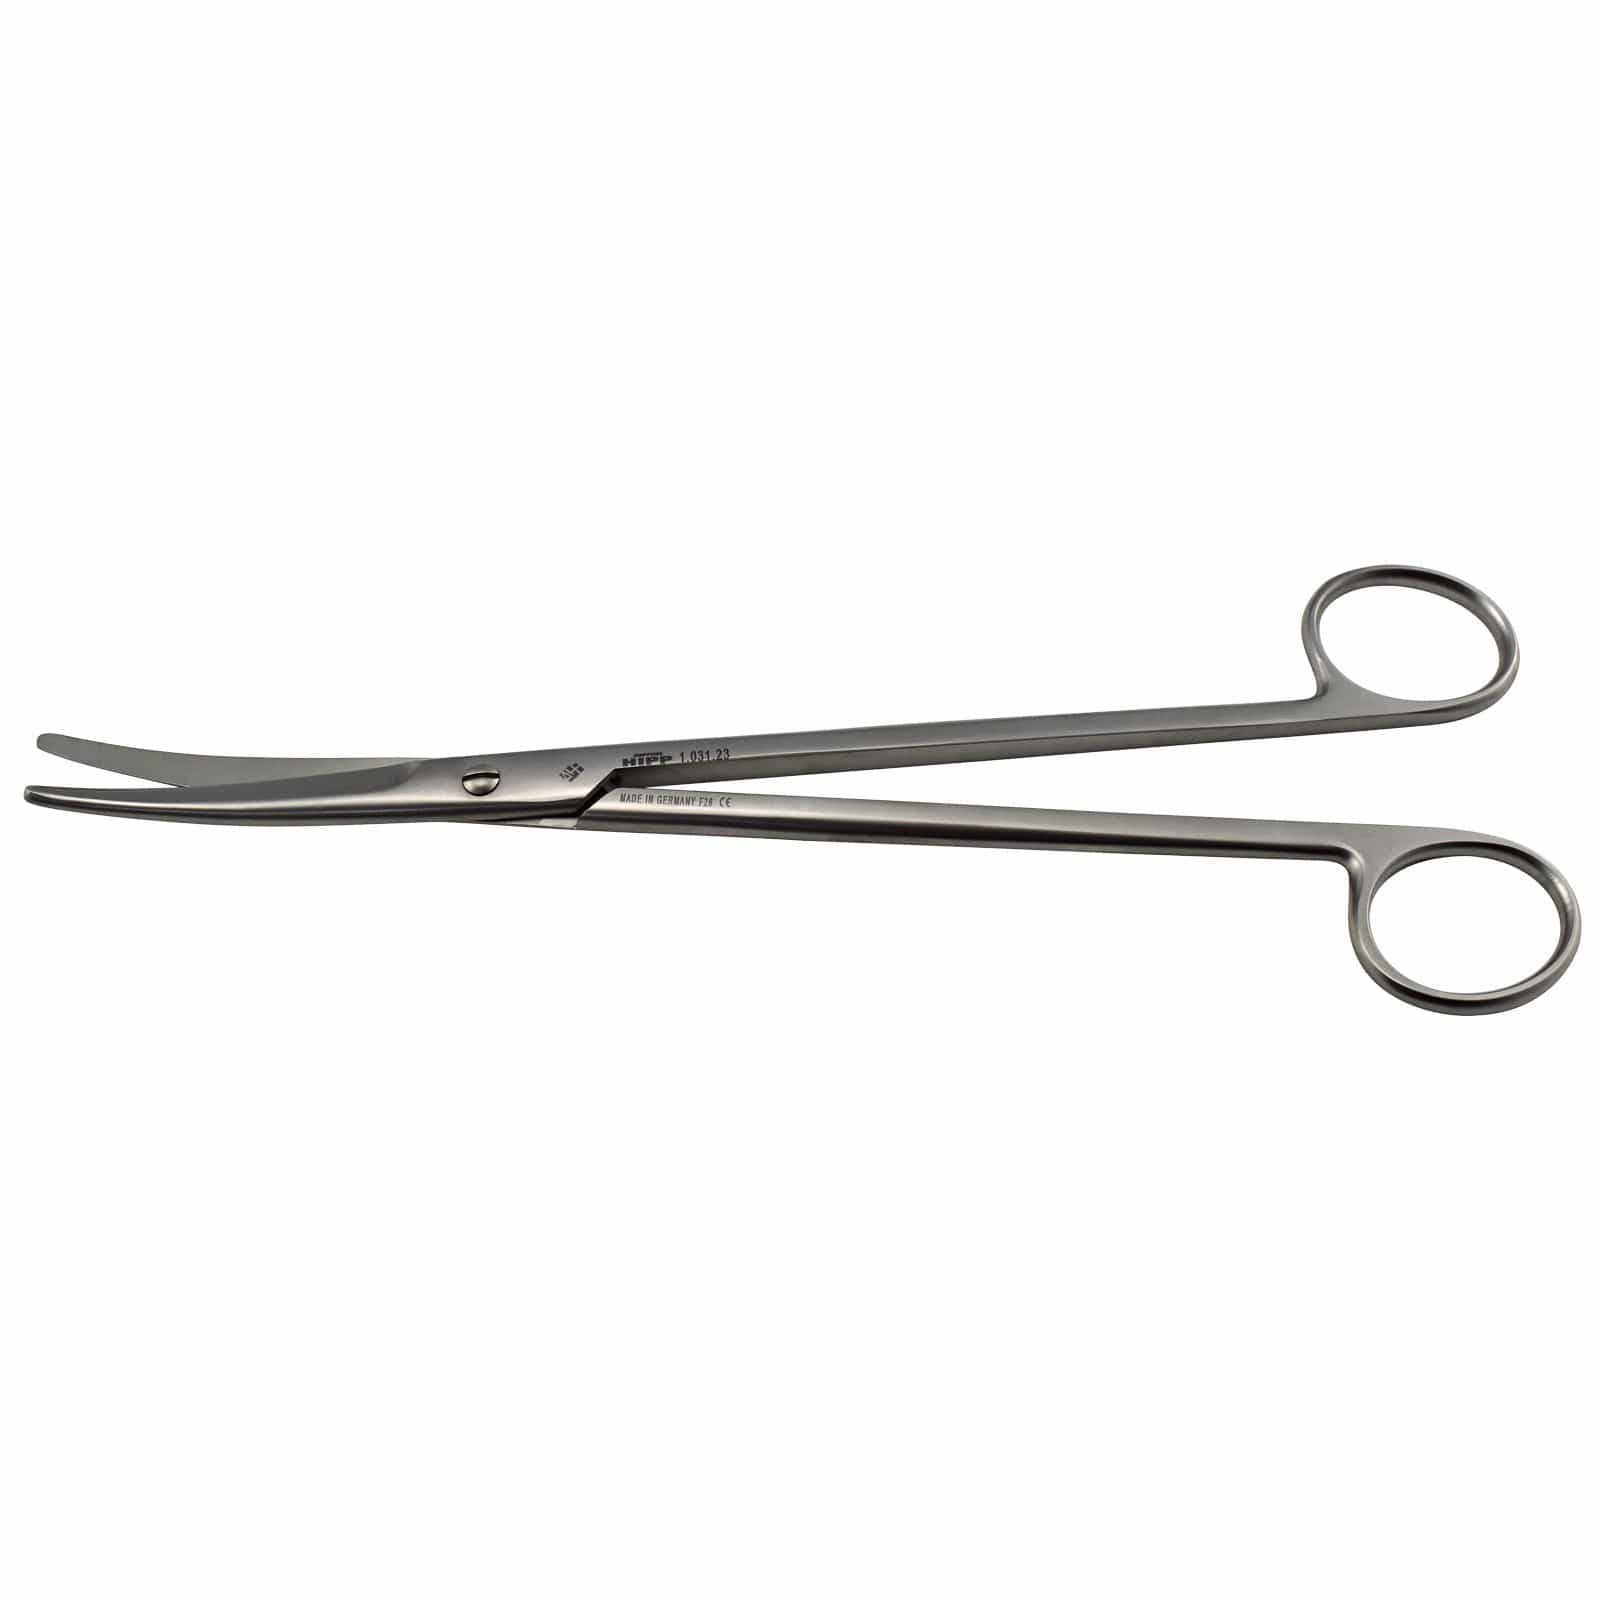 Hipp Surgical Instruments 23cm / Curved / Standard Hipp Mayo Scissors